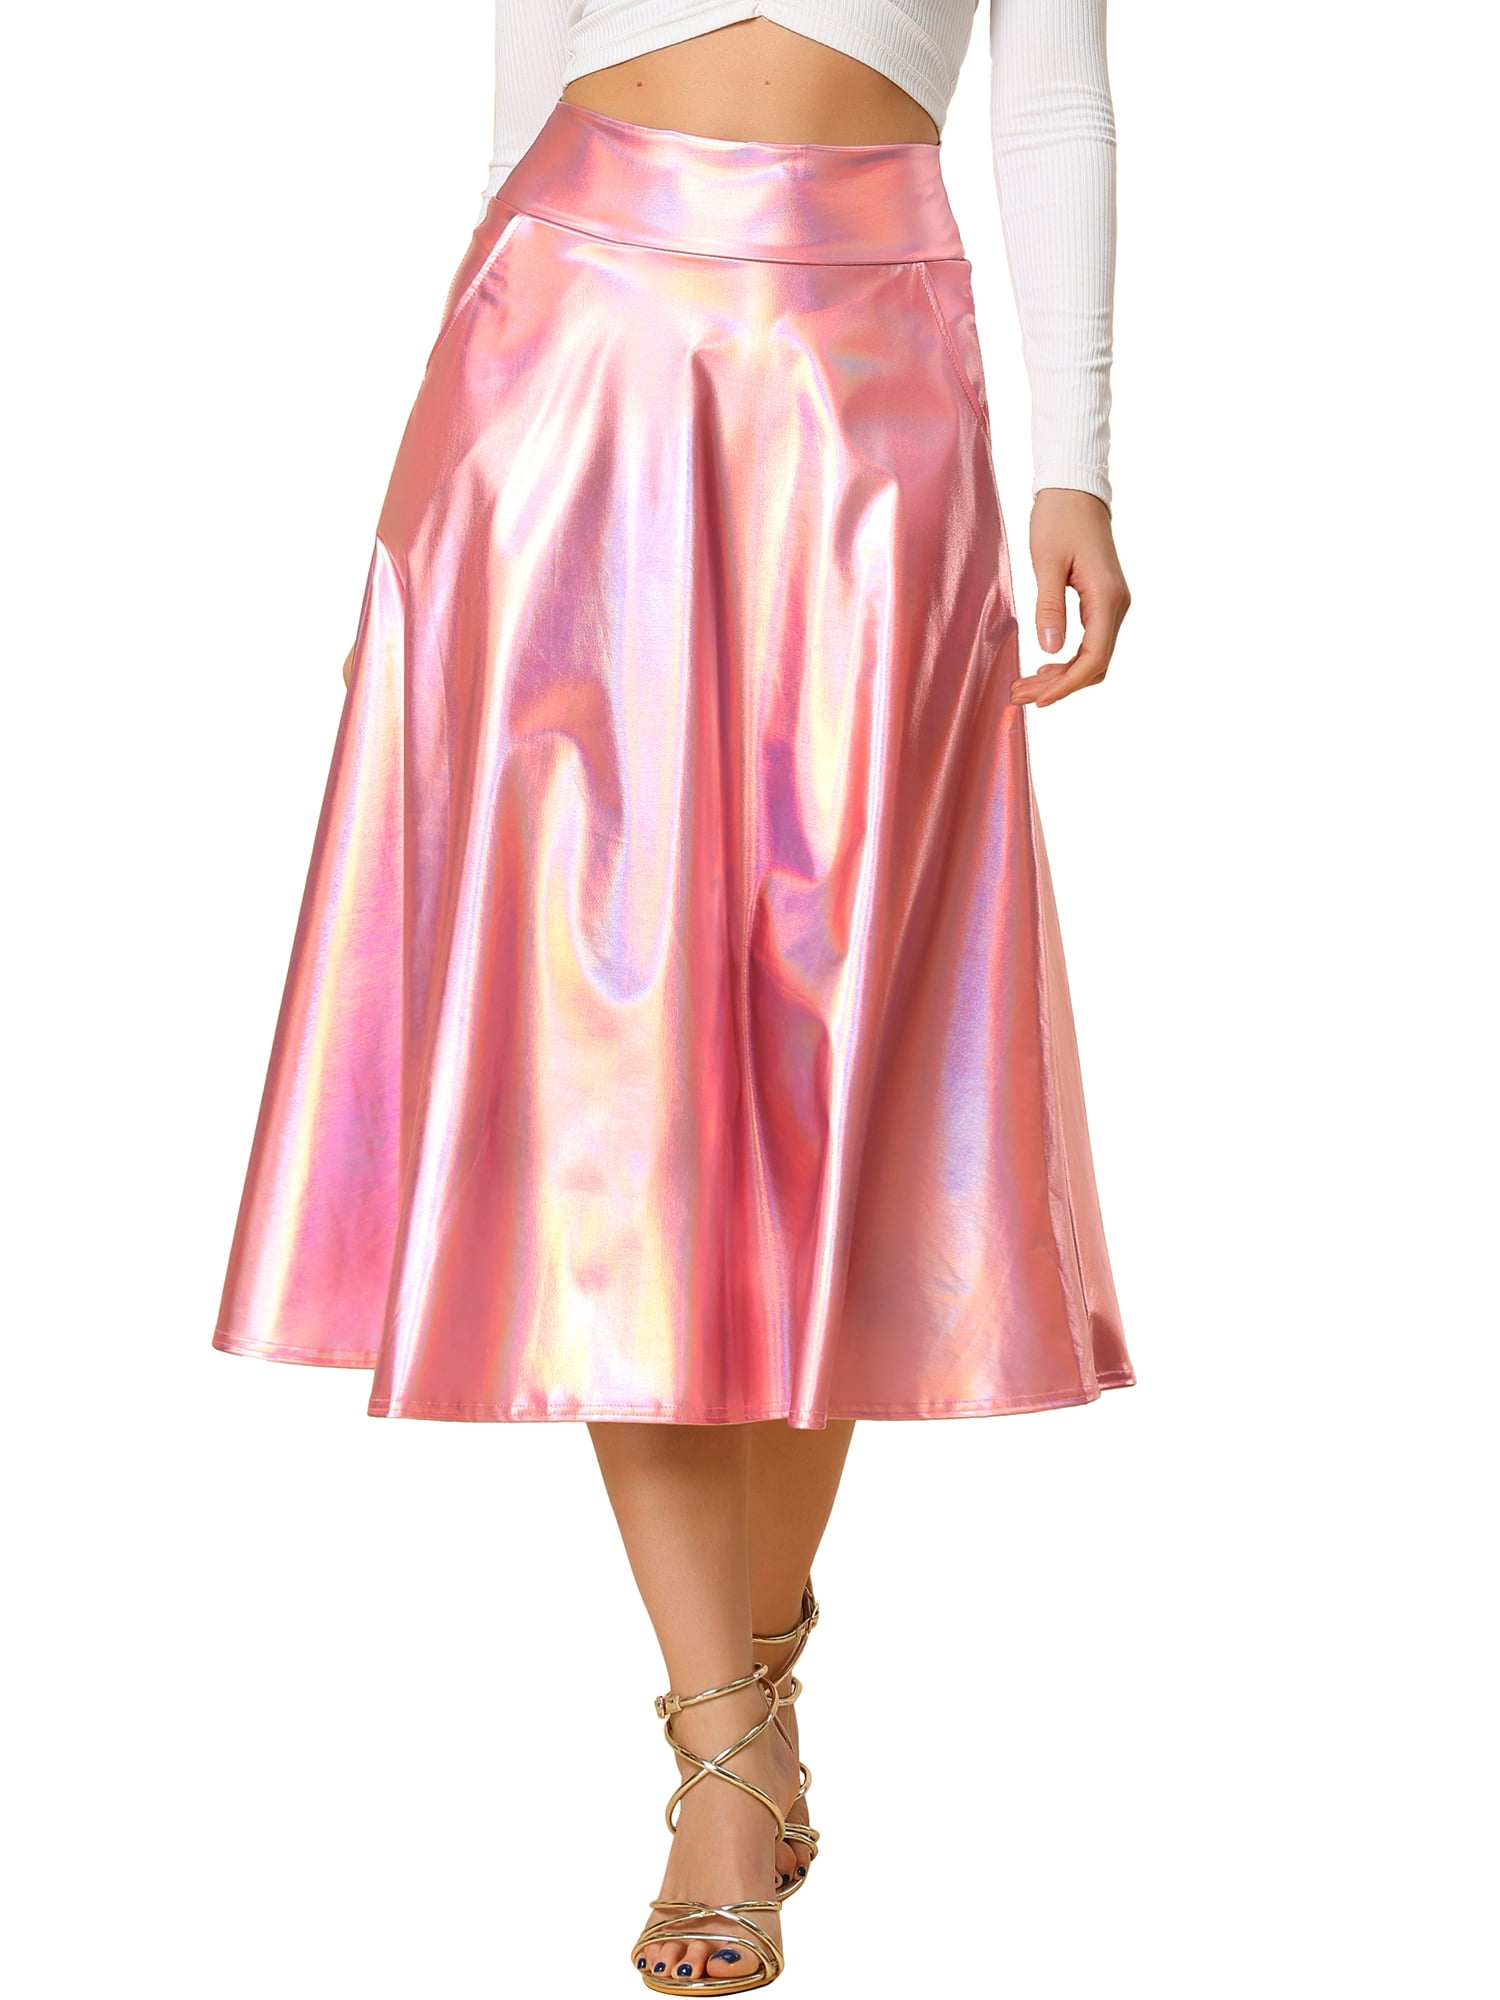 OLIVE GREENWomen Lady Satin Shiny Mini Skirt Pleated Retro High Waist S~3XL 